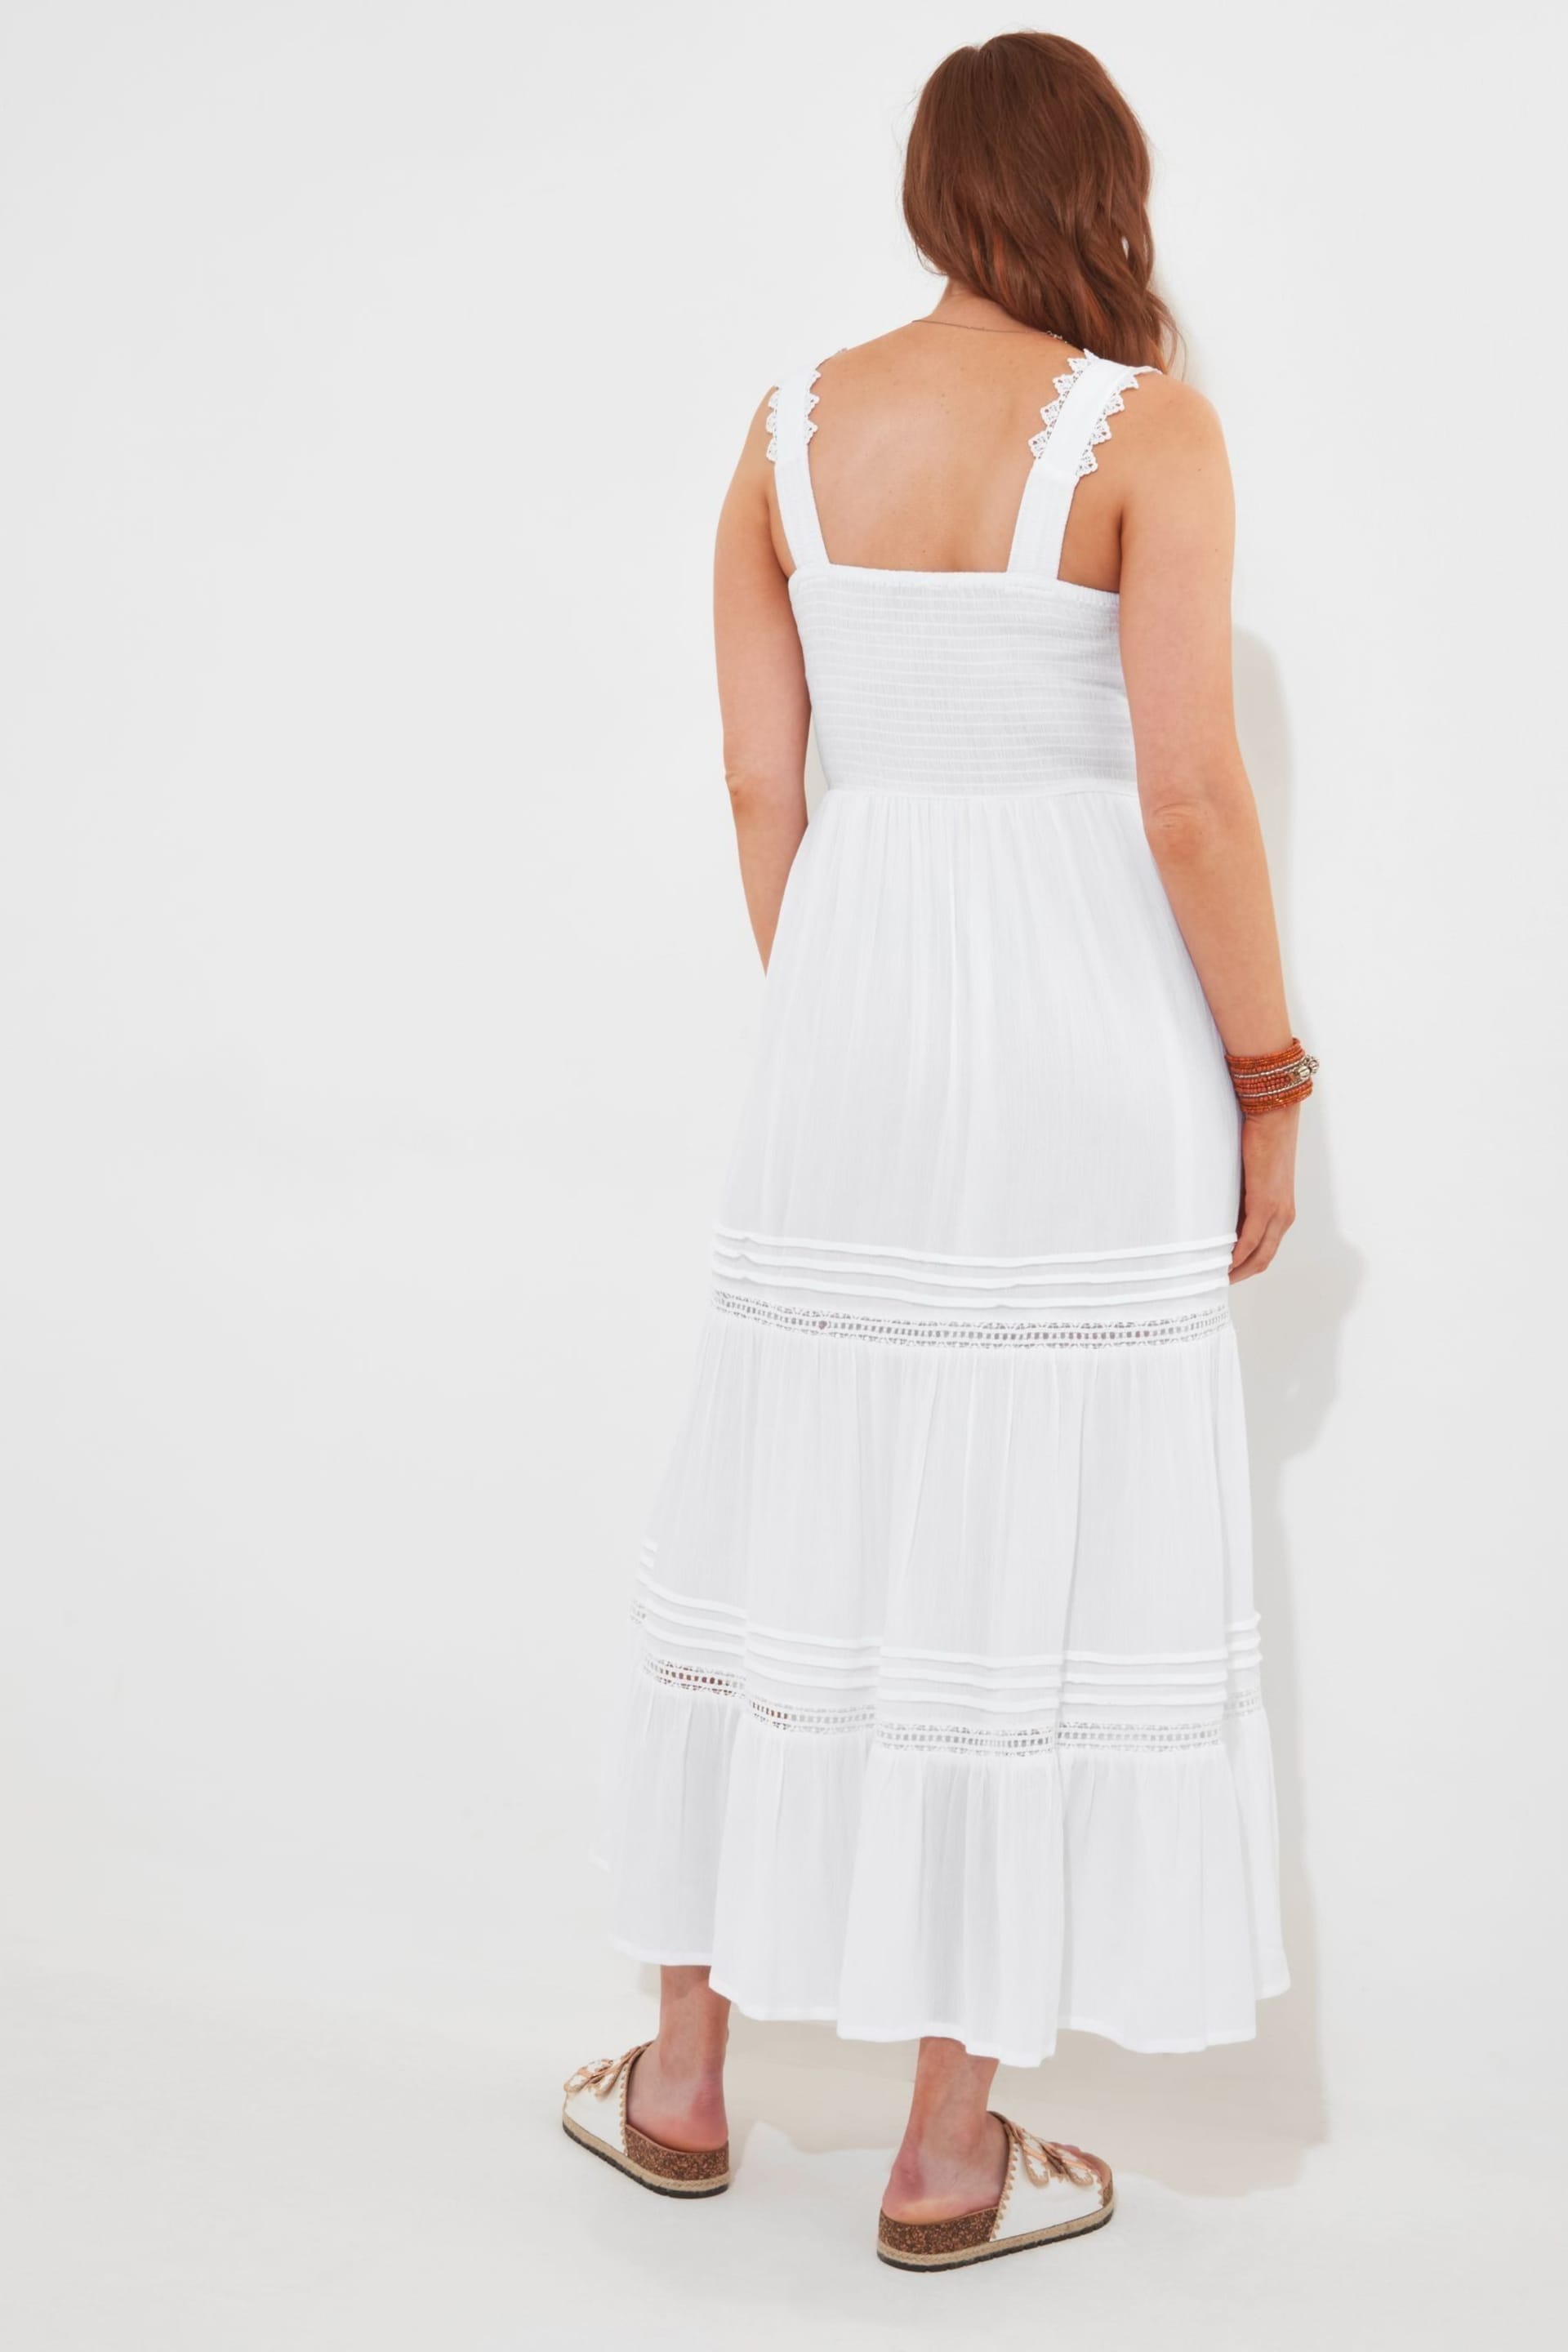 Joe Browns White Petite Shirred Waist Lace Detail Crinkle Midaxi Dress - Image 4 of 6